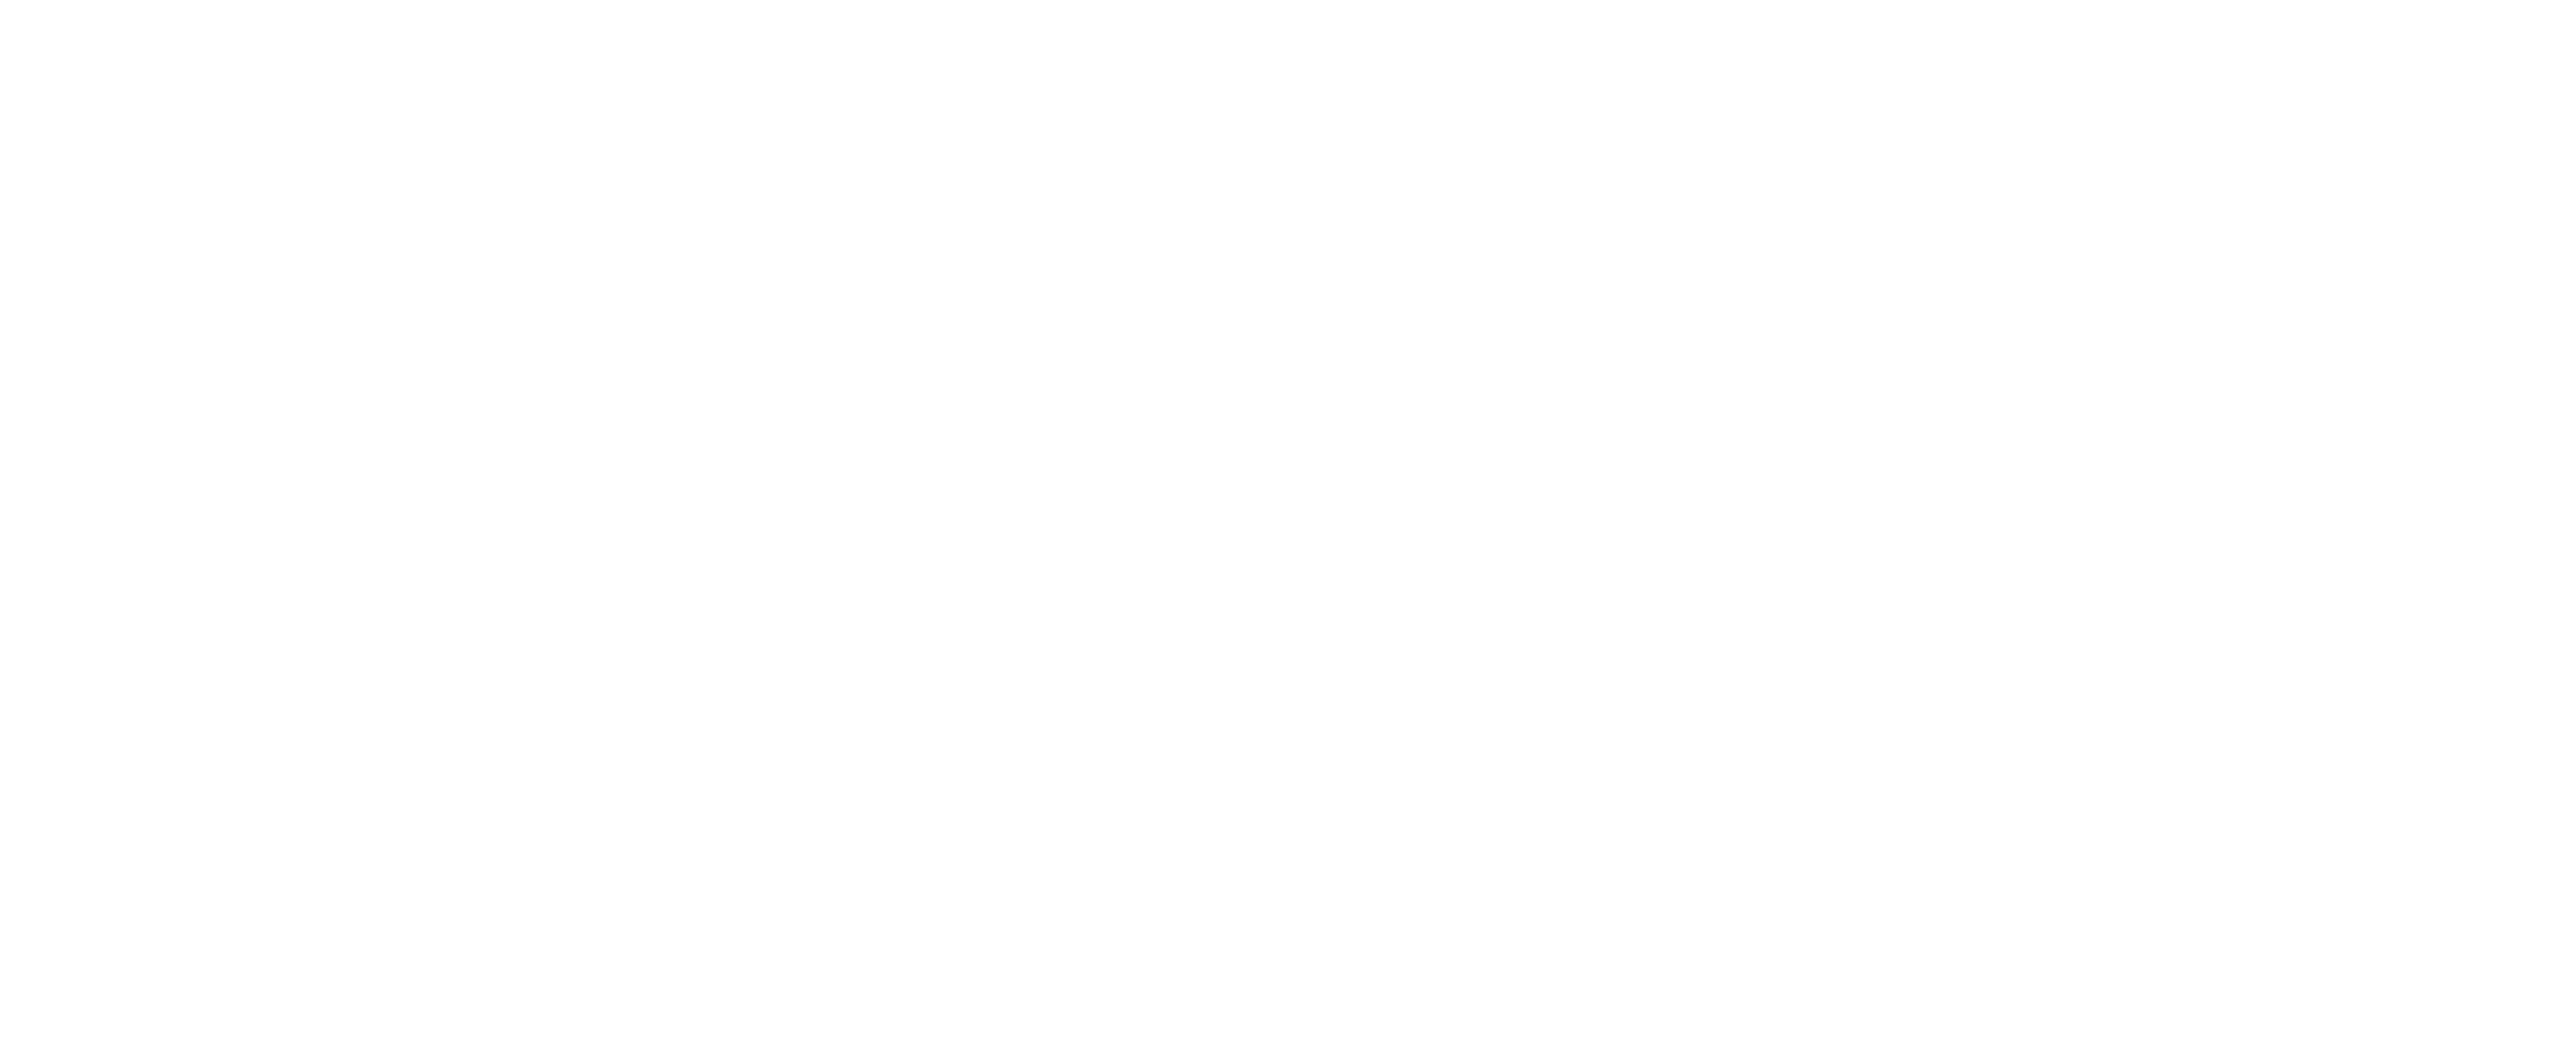 Logo MECC negativo